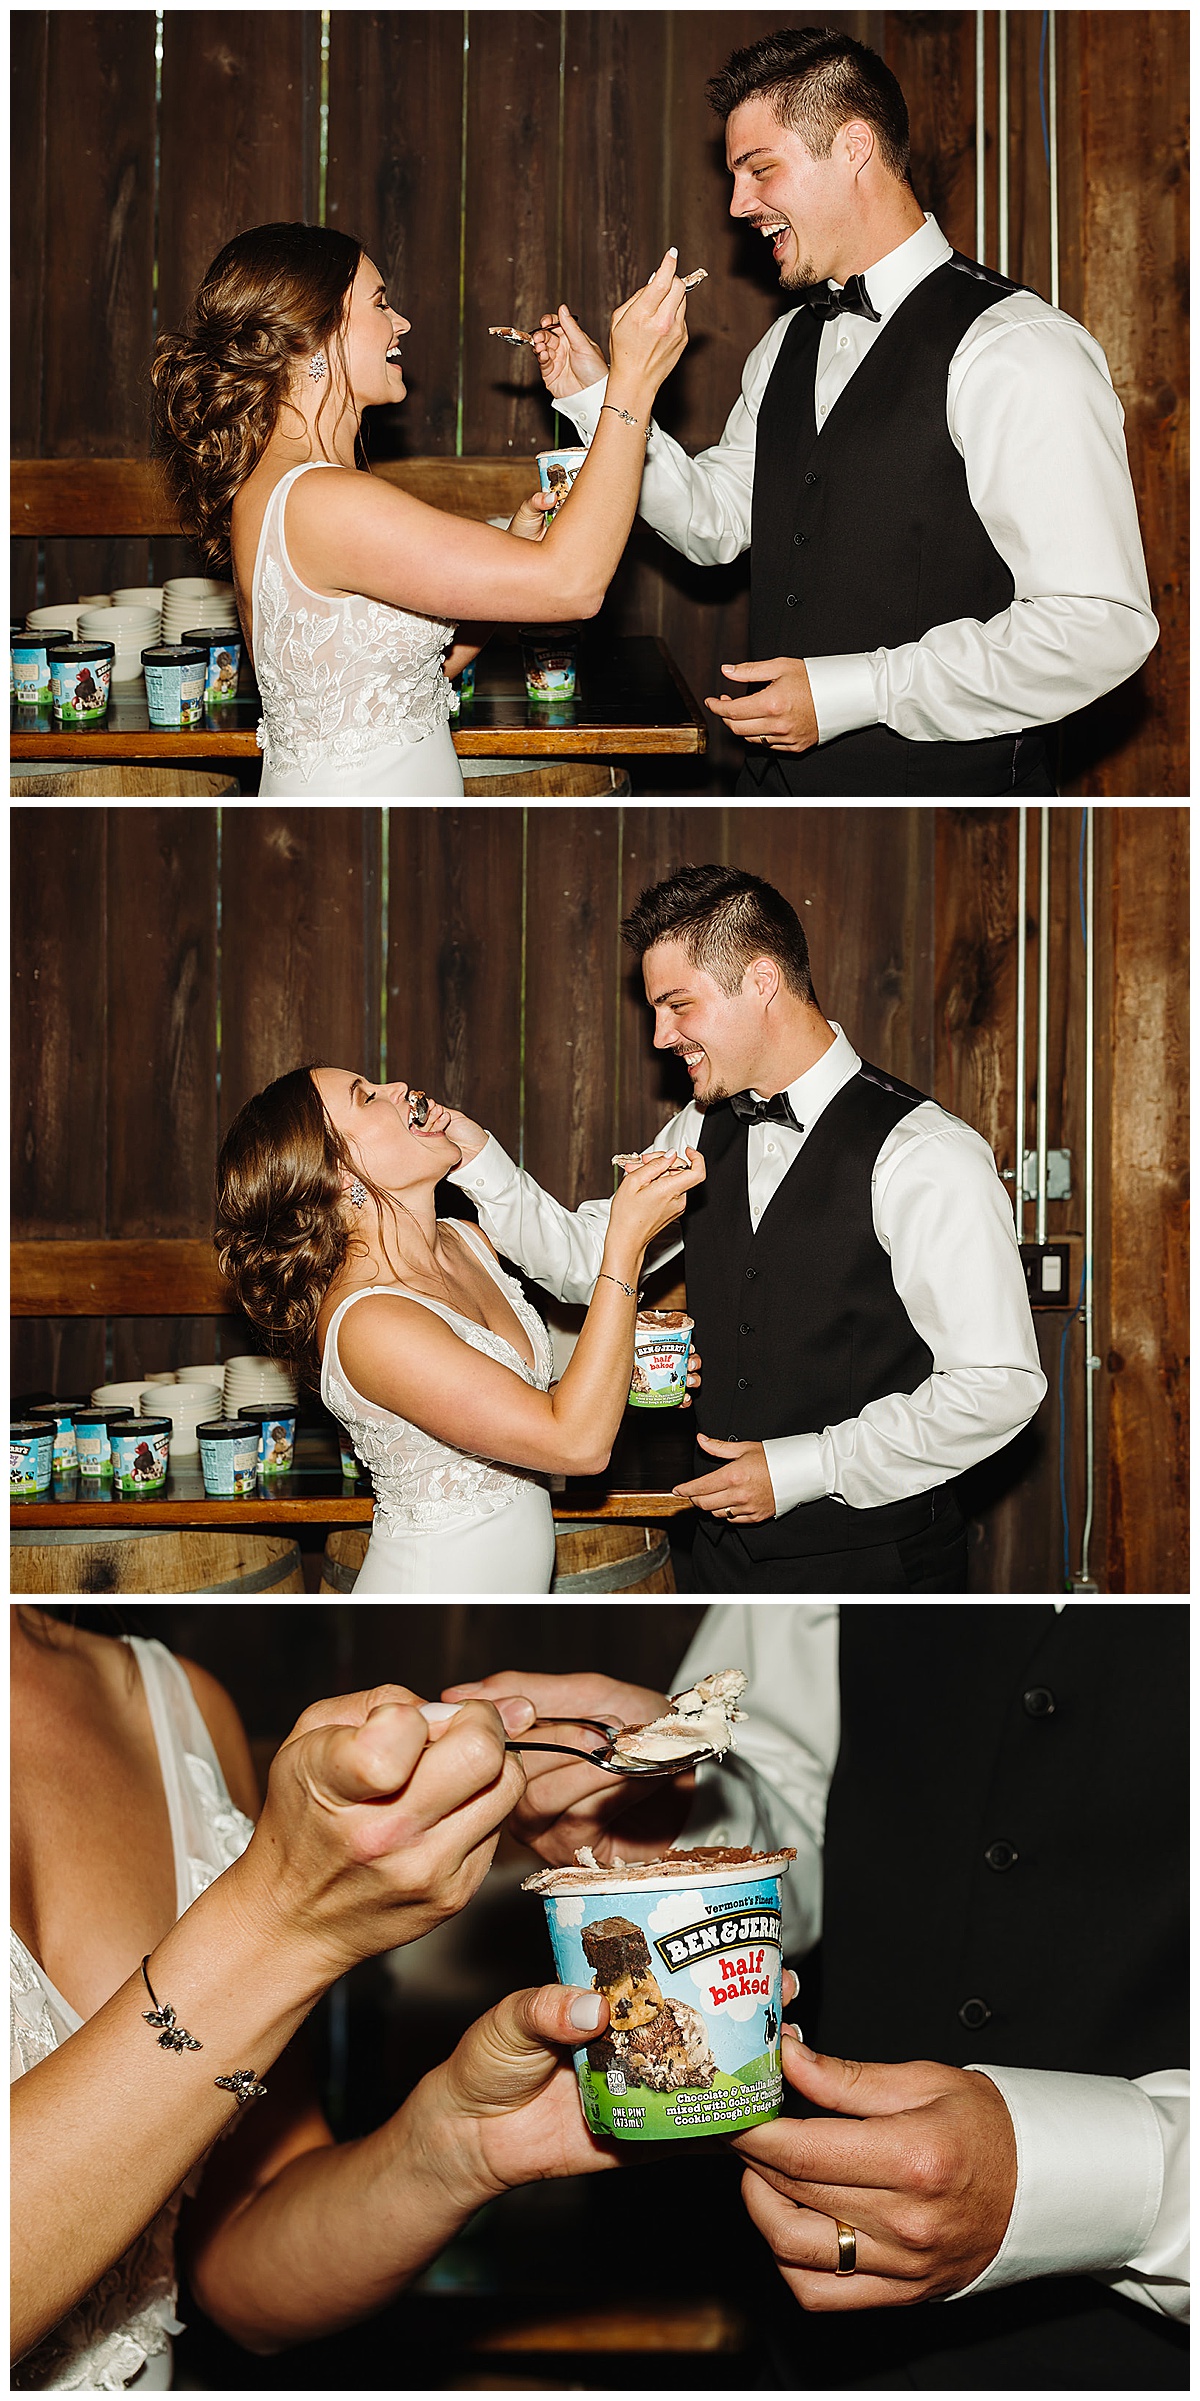 Bride and groom share ice cream by Kayla Bouren Photography